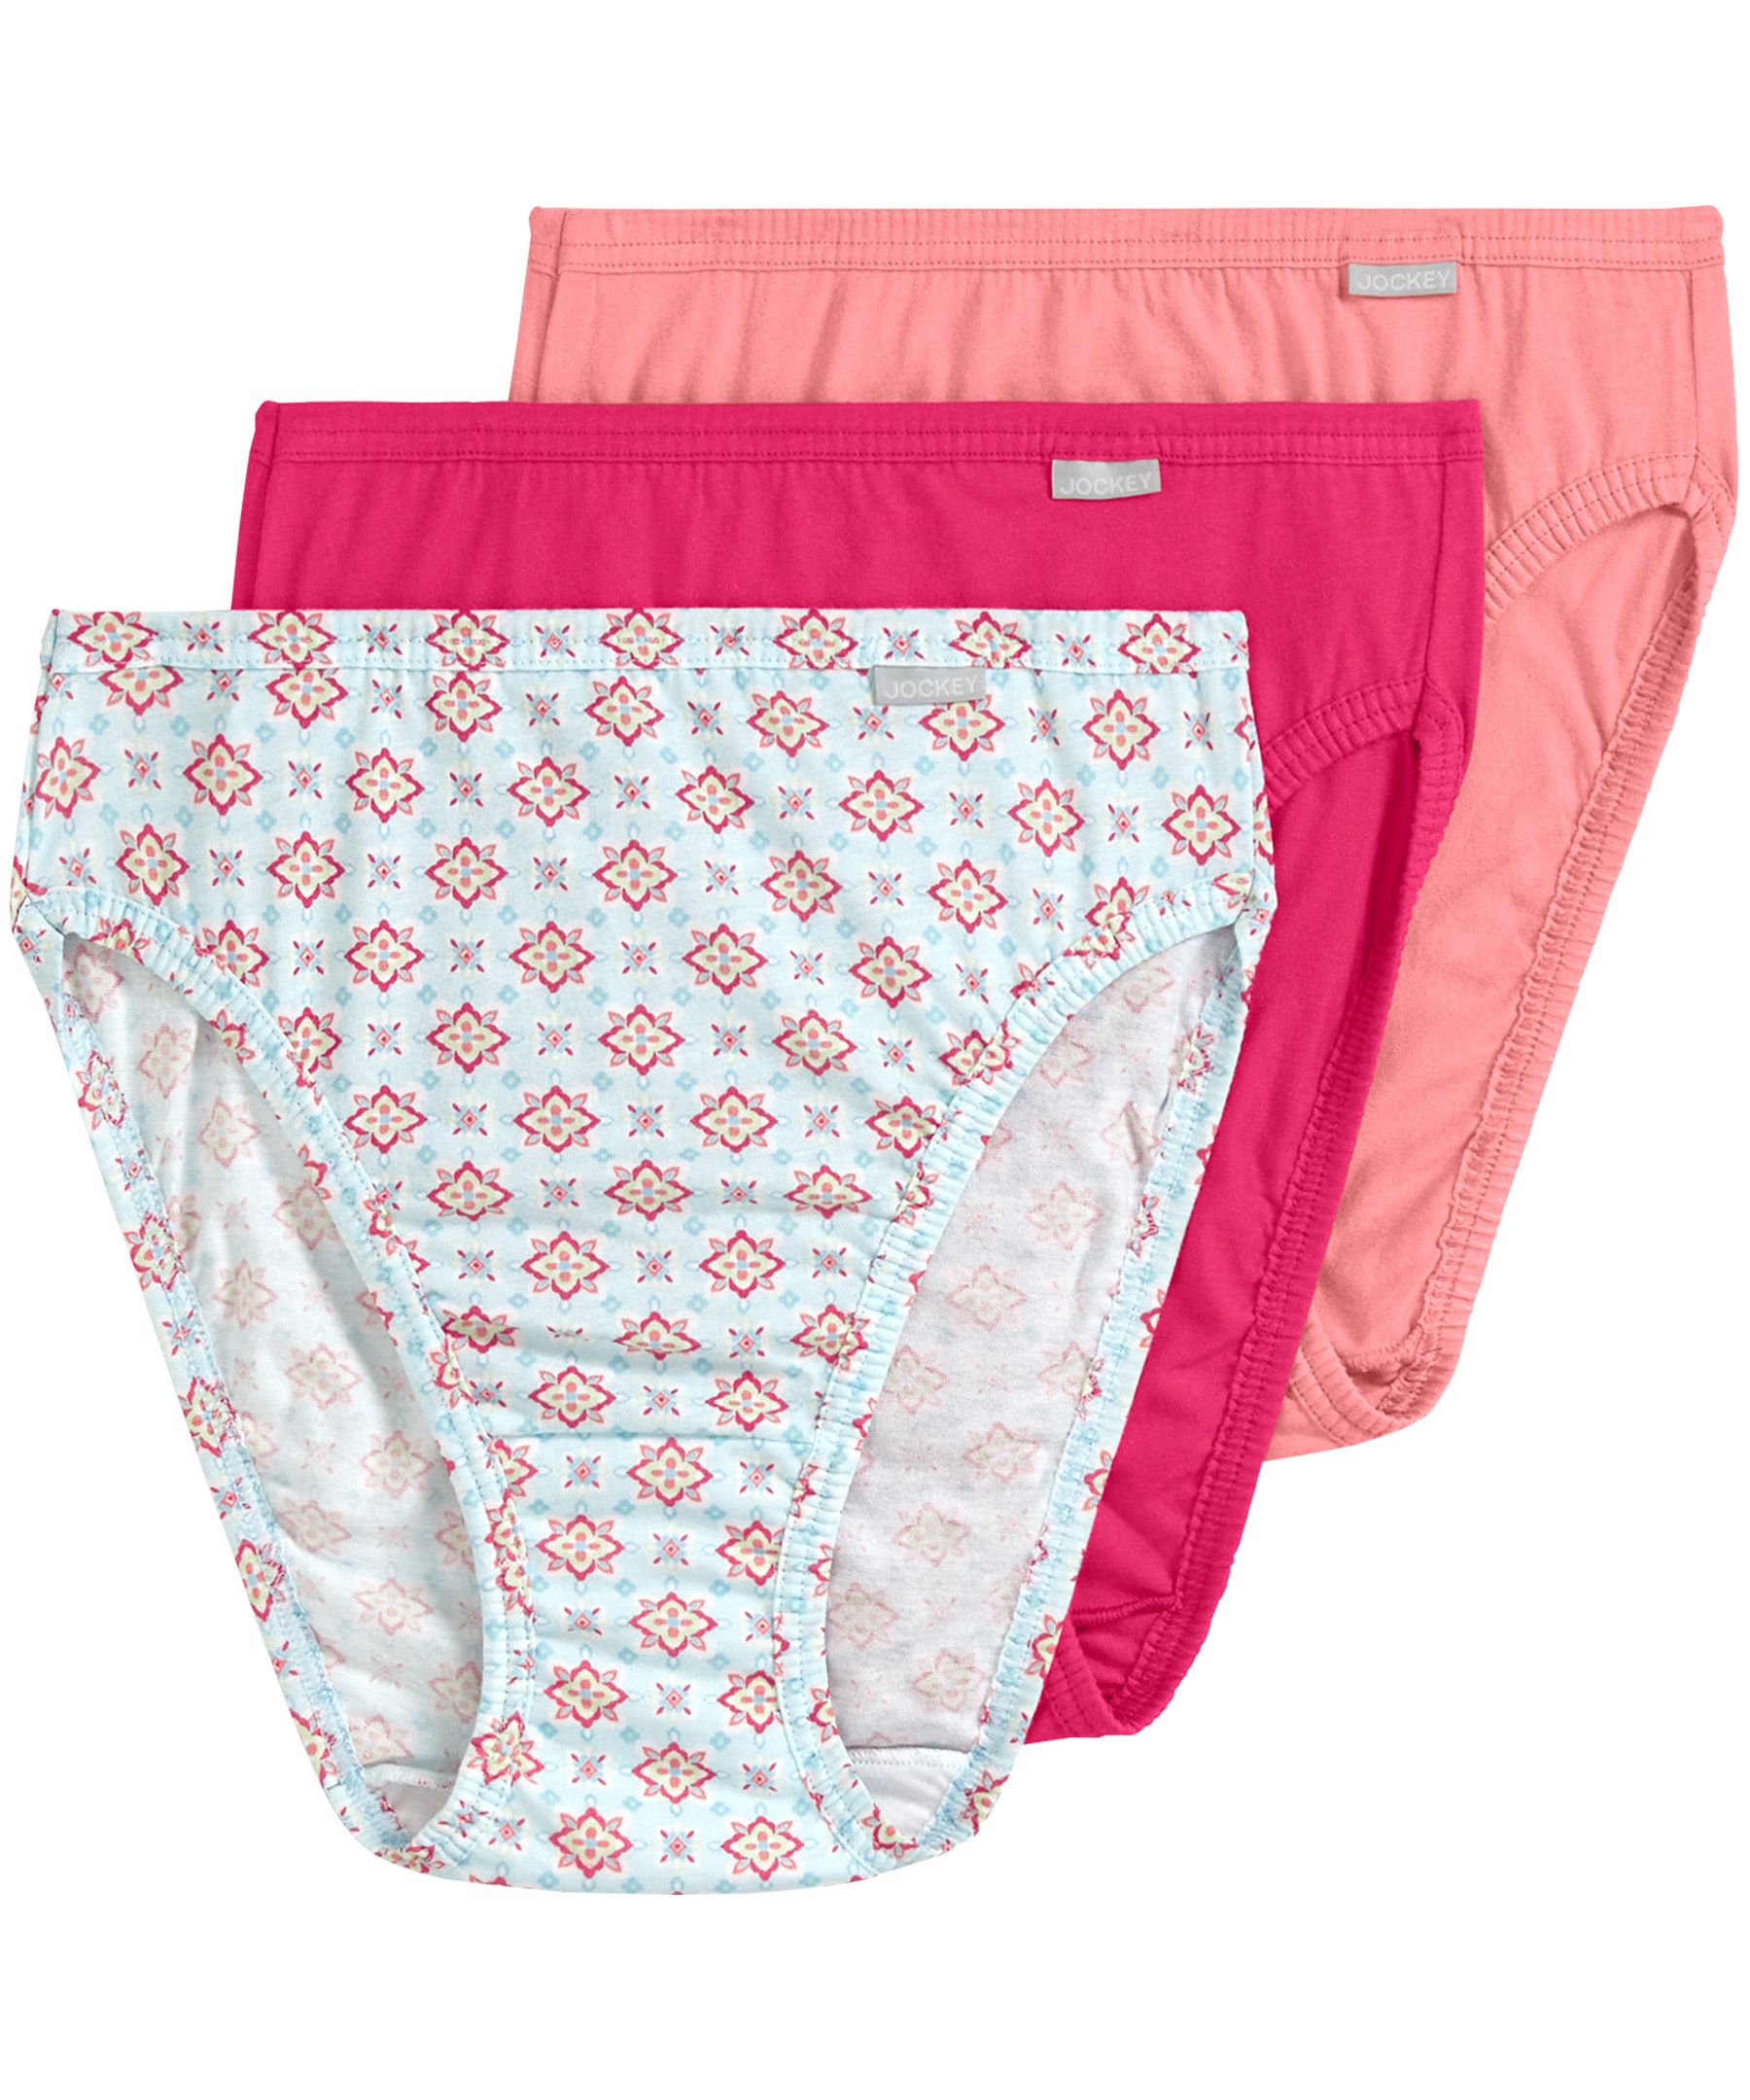 Jockey Women's 3 Pack Elance Basic Underwear French Cut Briefs